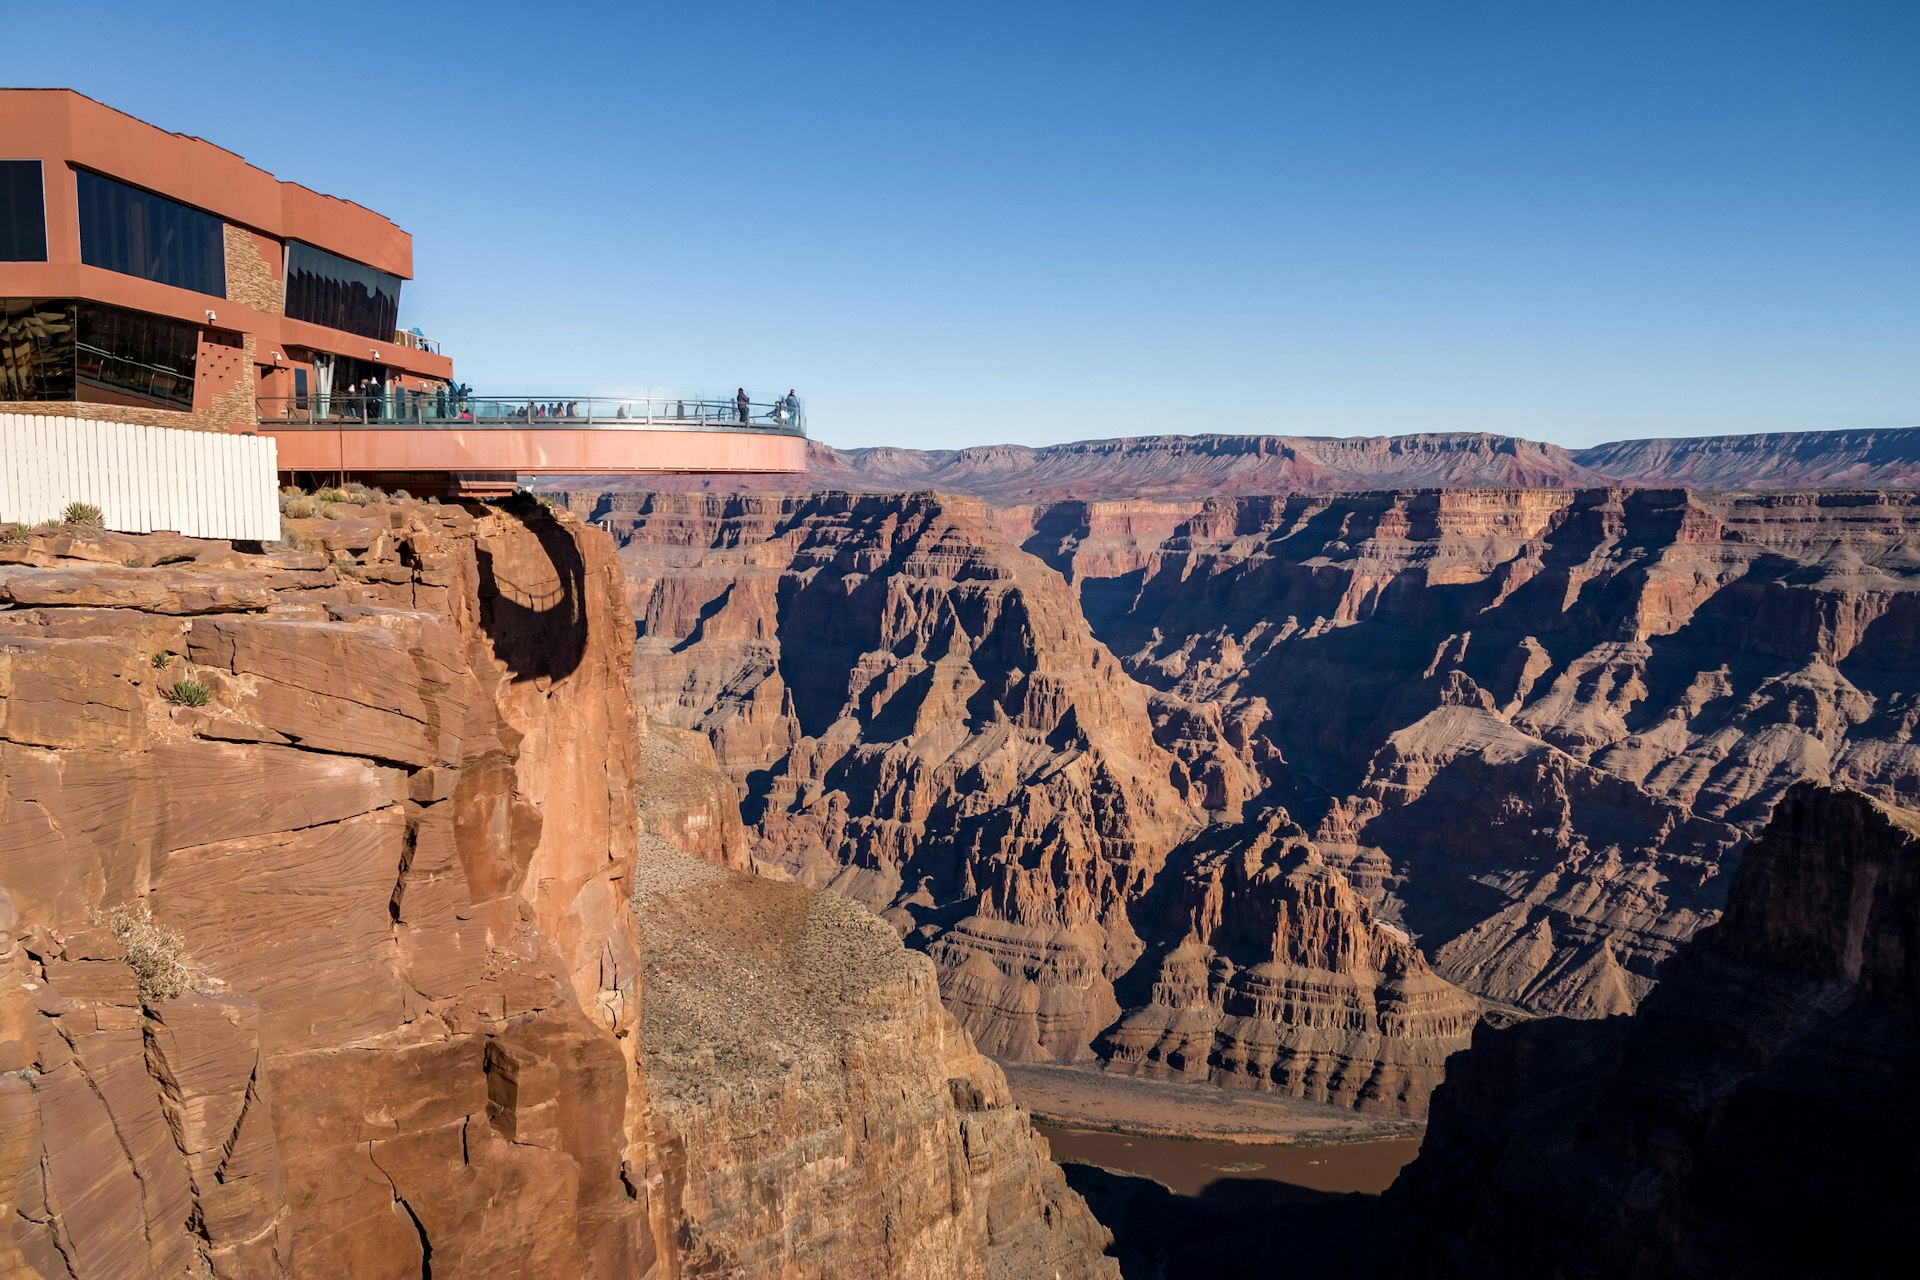 Skywalk glass observation platform at Grand Canyon West, Arizona, USA